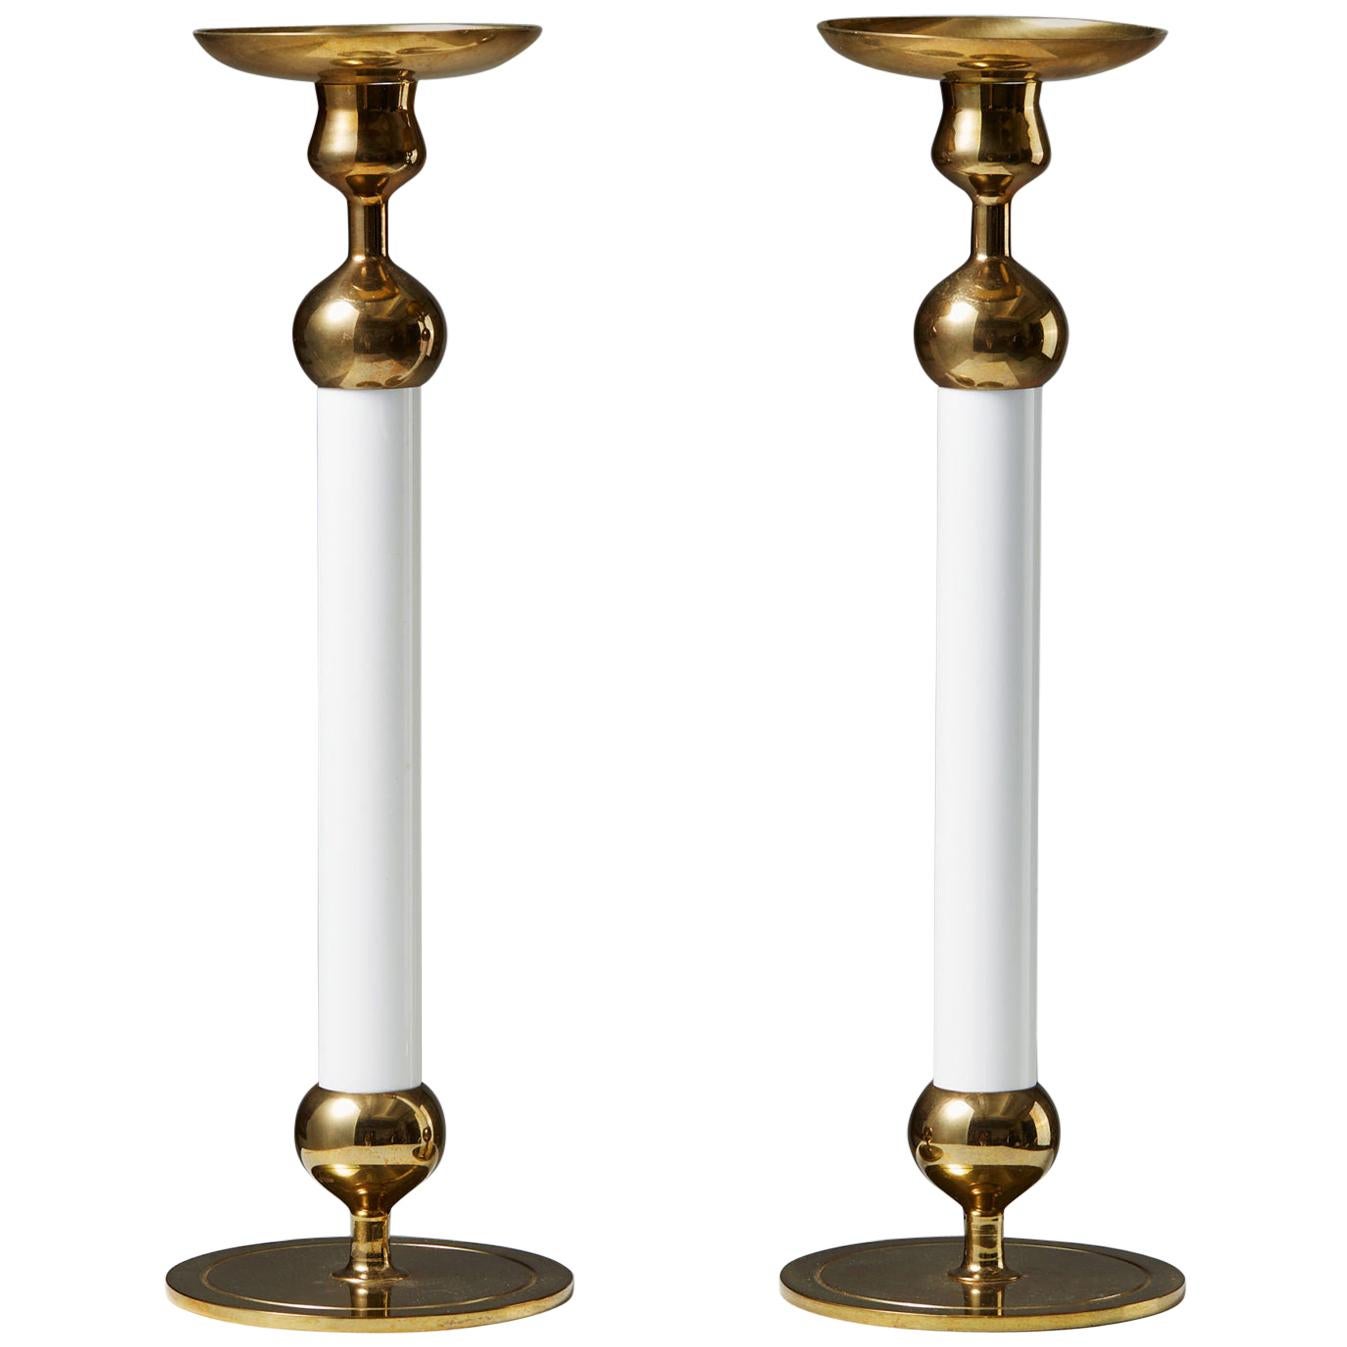 Pair of Candlesticks Designed by Josef Frank for Svenskt Tenn, Sweden, 1950s